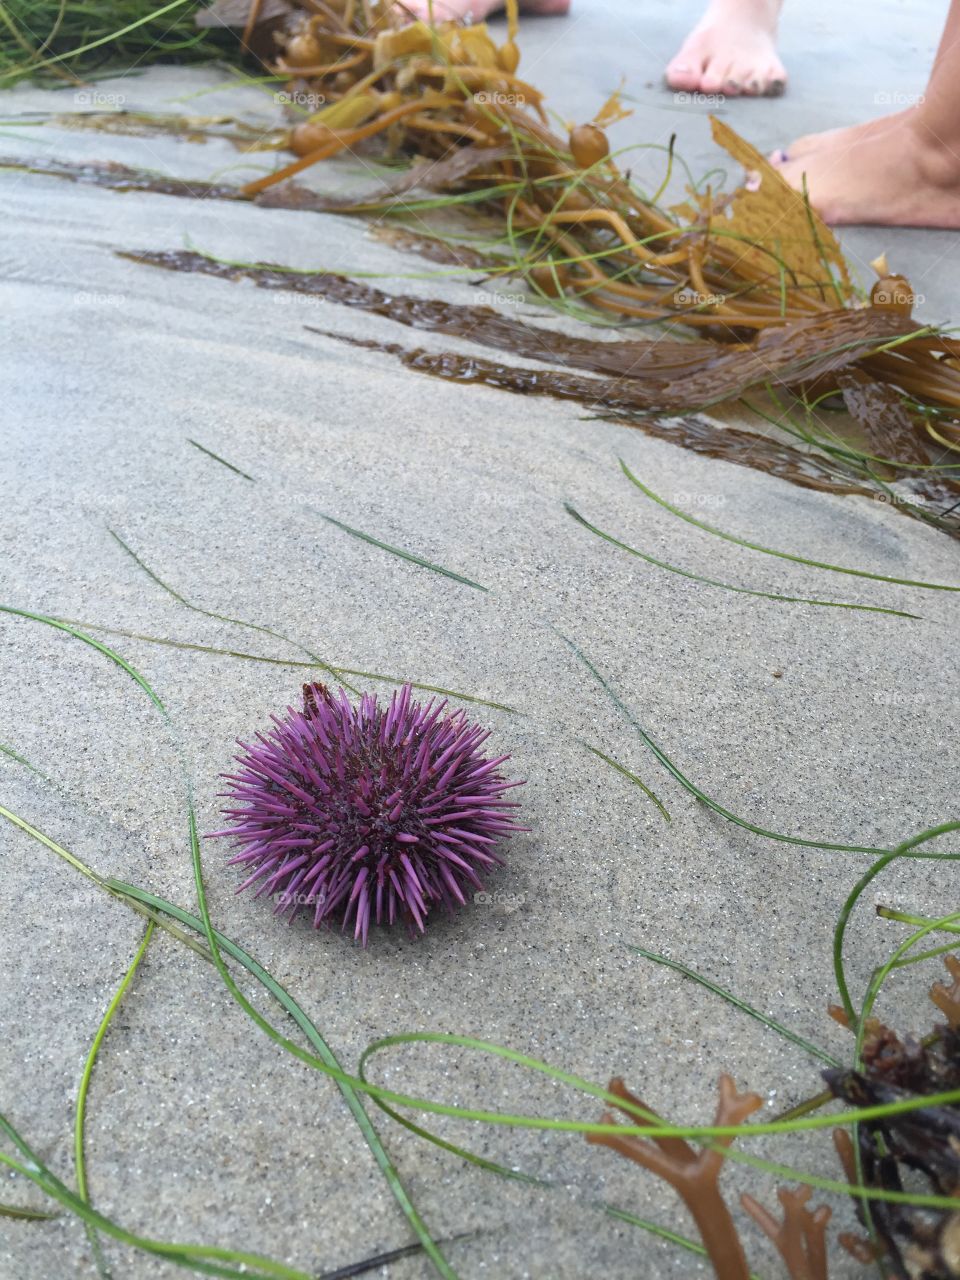 Purple sea anemone on sandy beach with kelp and seaweed.